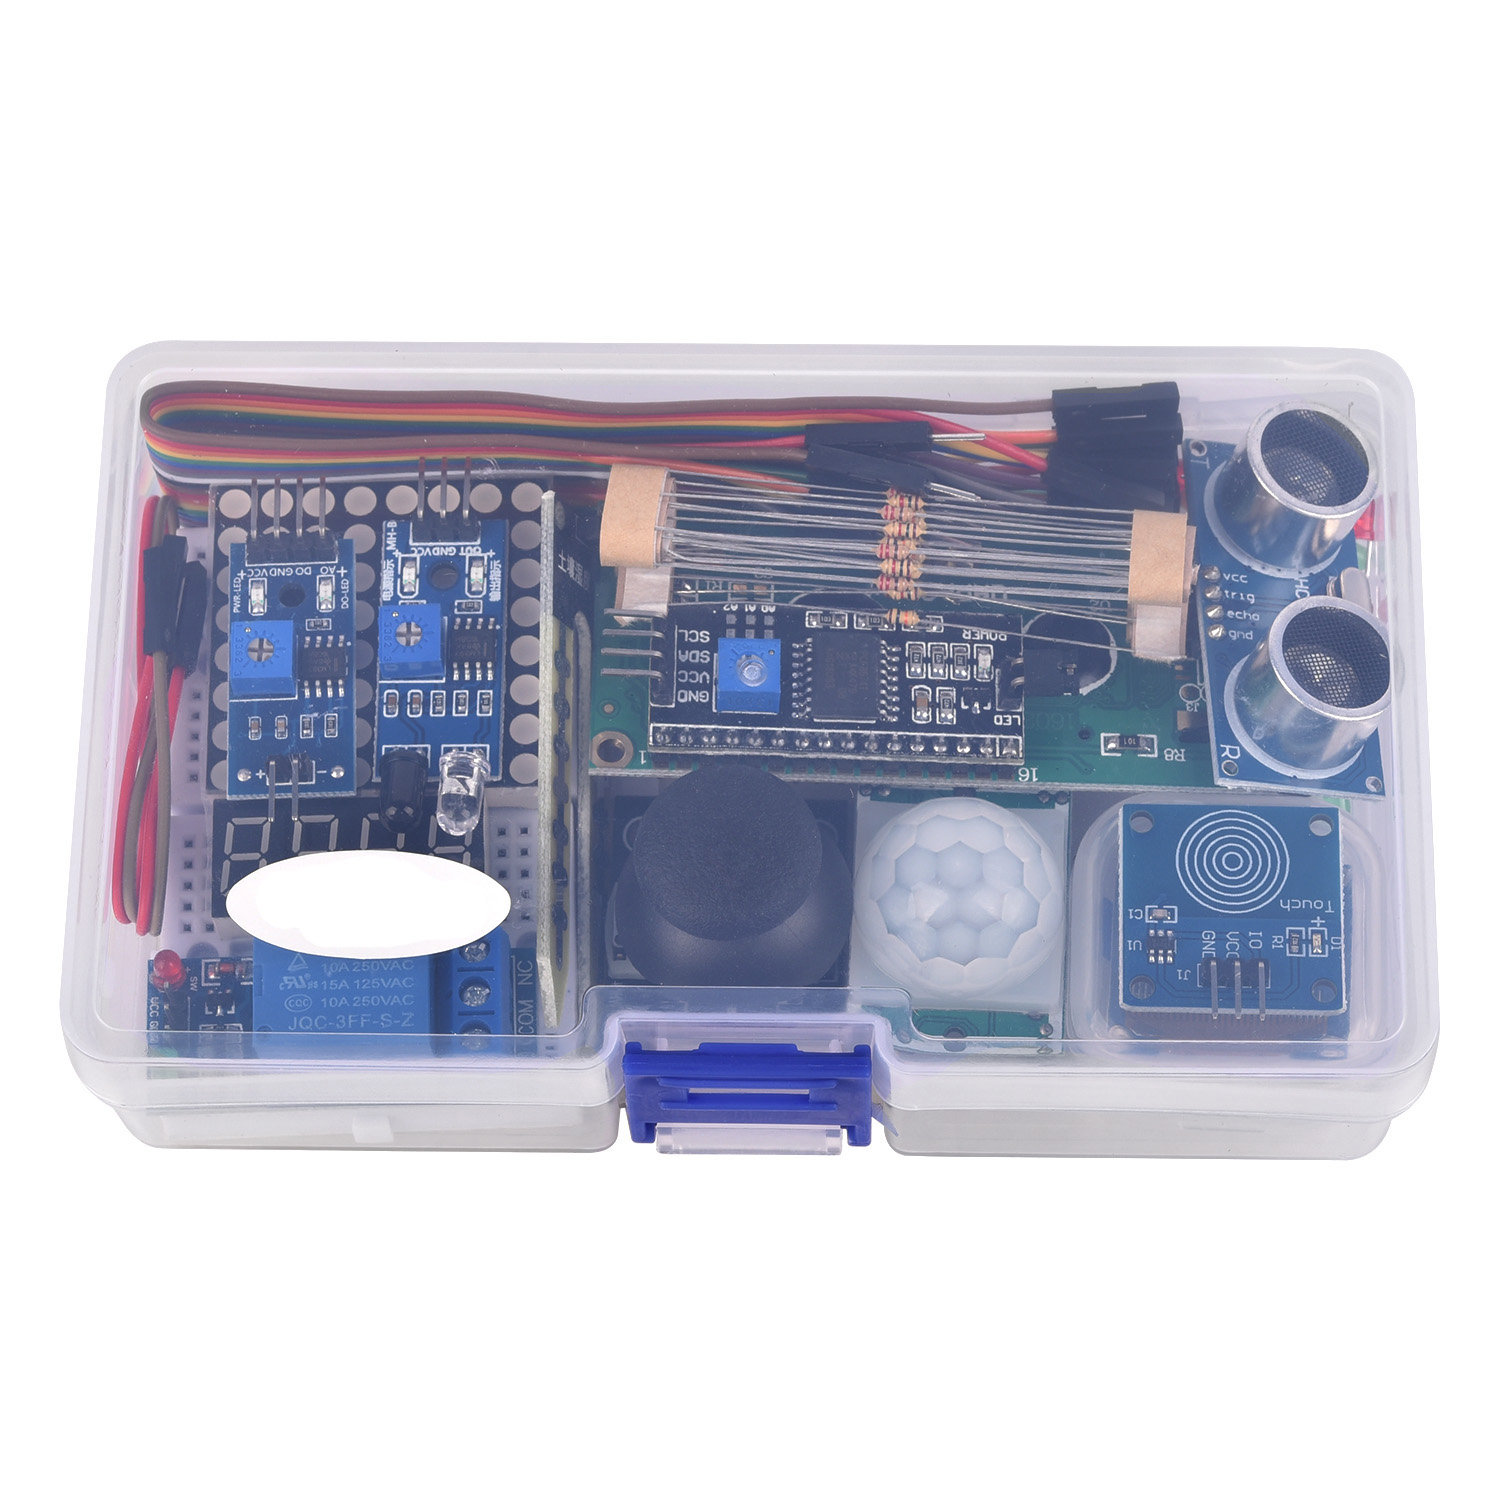 AOQDQDQDreg-Module-Sensor-Kit-For-Arduino-with-096quot-OLED-1602-LCD-Display-Relay-Servo-Motor-DHT11-1758472-2